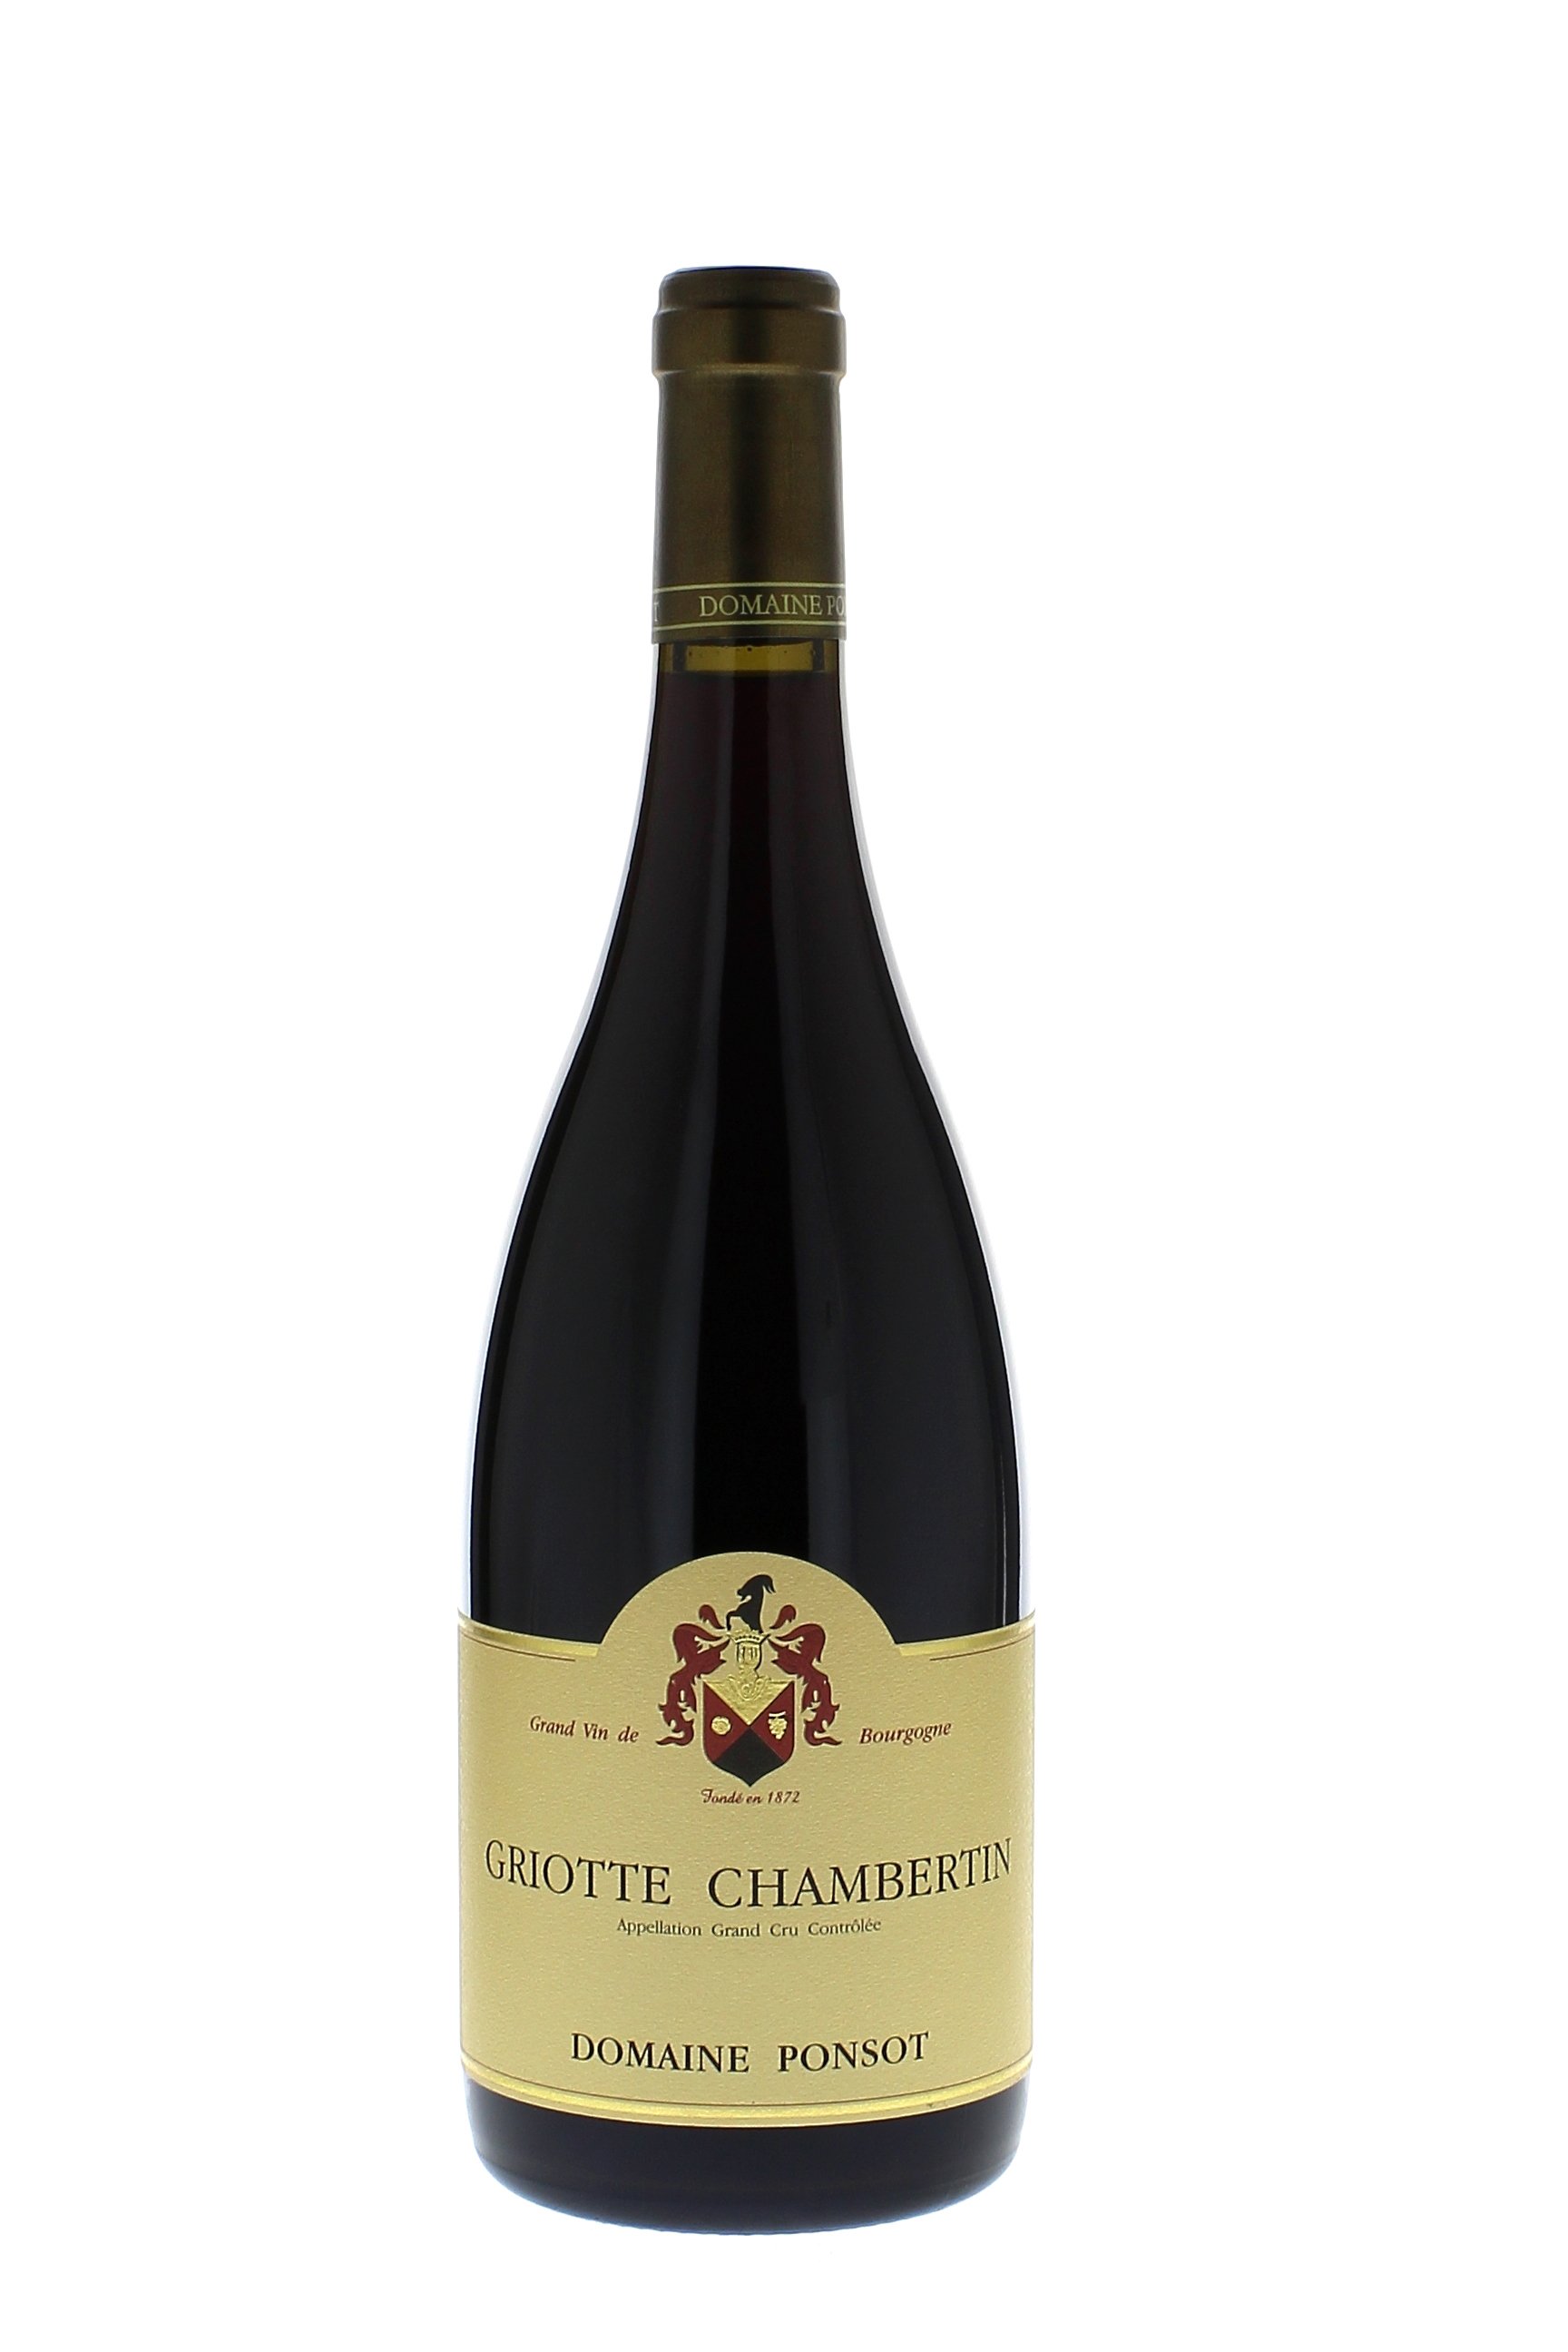 Griotte chambertin grand cru 2008 Domaine PONSOT, Bourgogne rouge